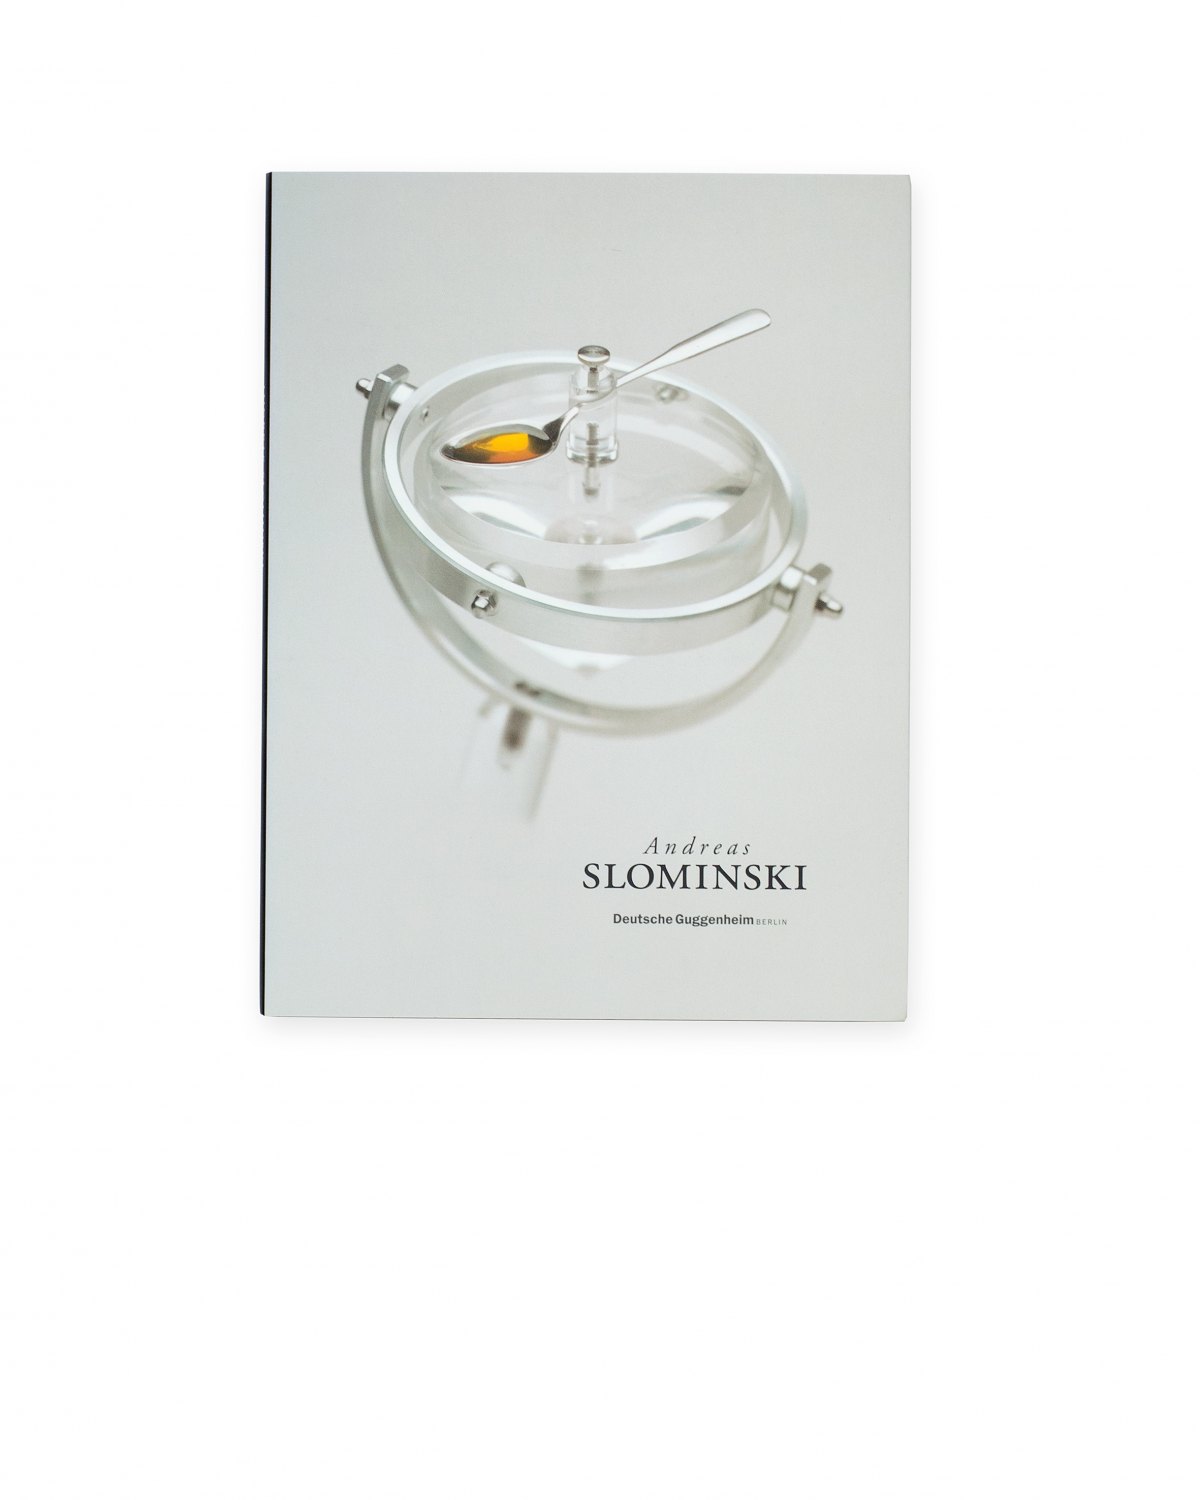 Andreas Slominski, Berlin 1999  Catalogue, Deutsche Guggenheim, Berlin/New York 1999, 72 p. ISBN 978-0-89207-217-2